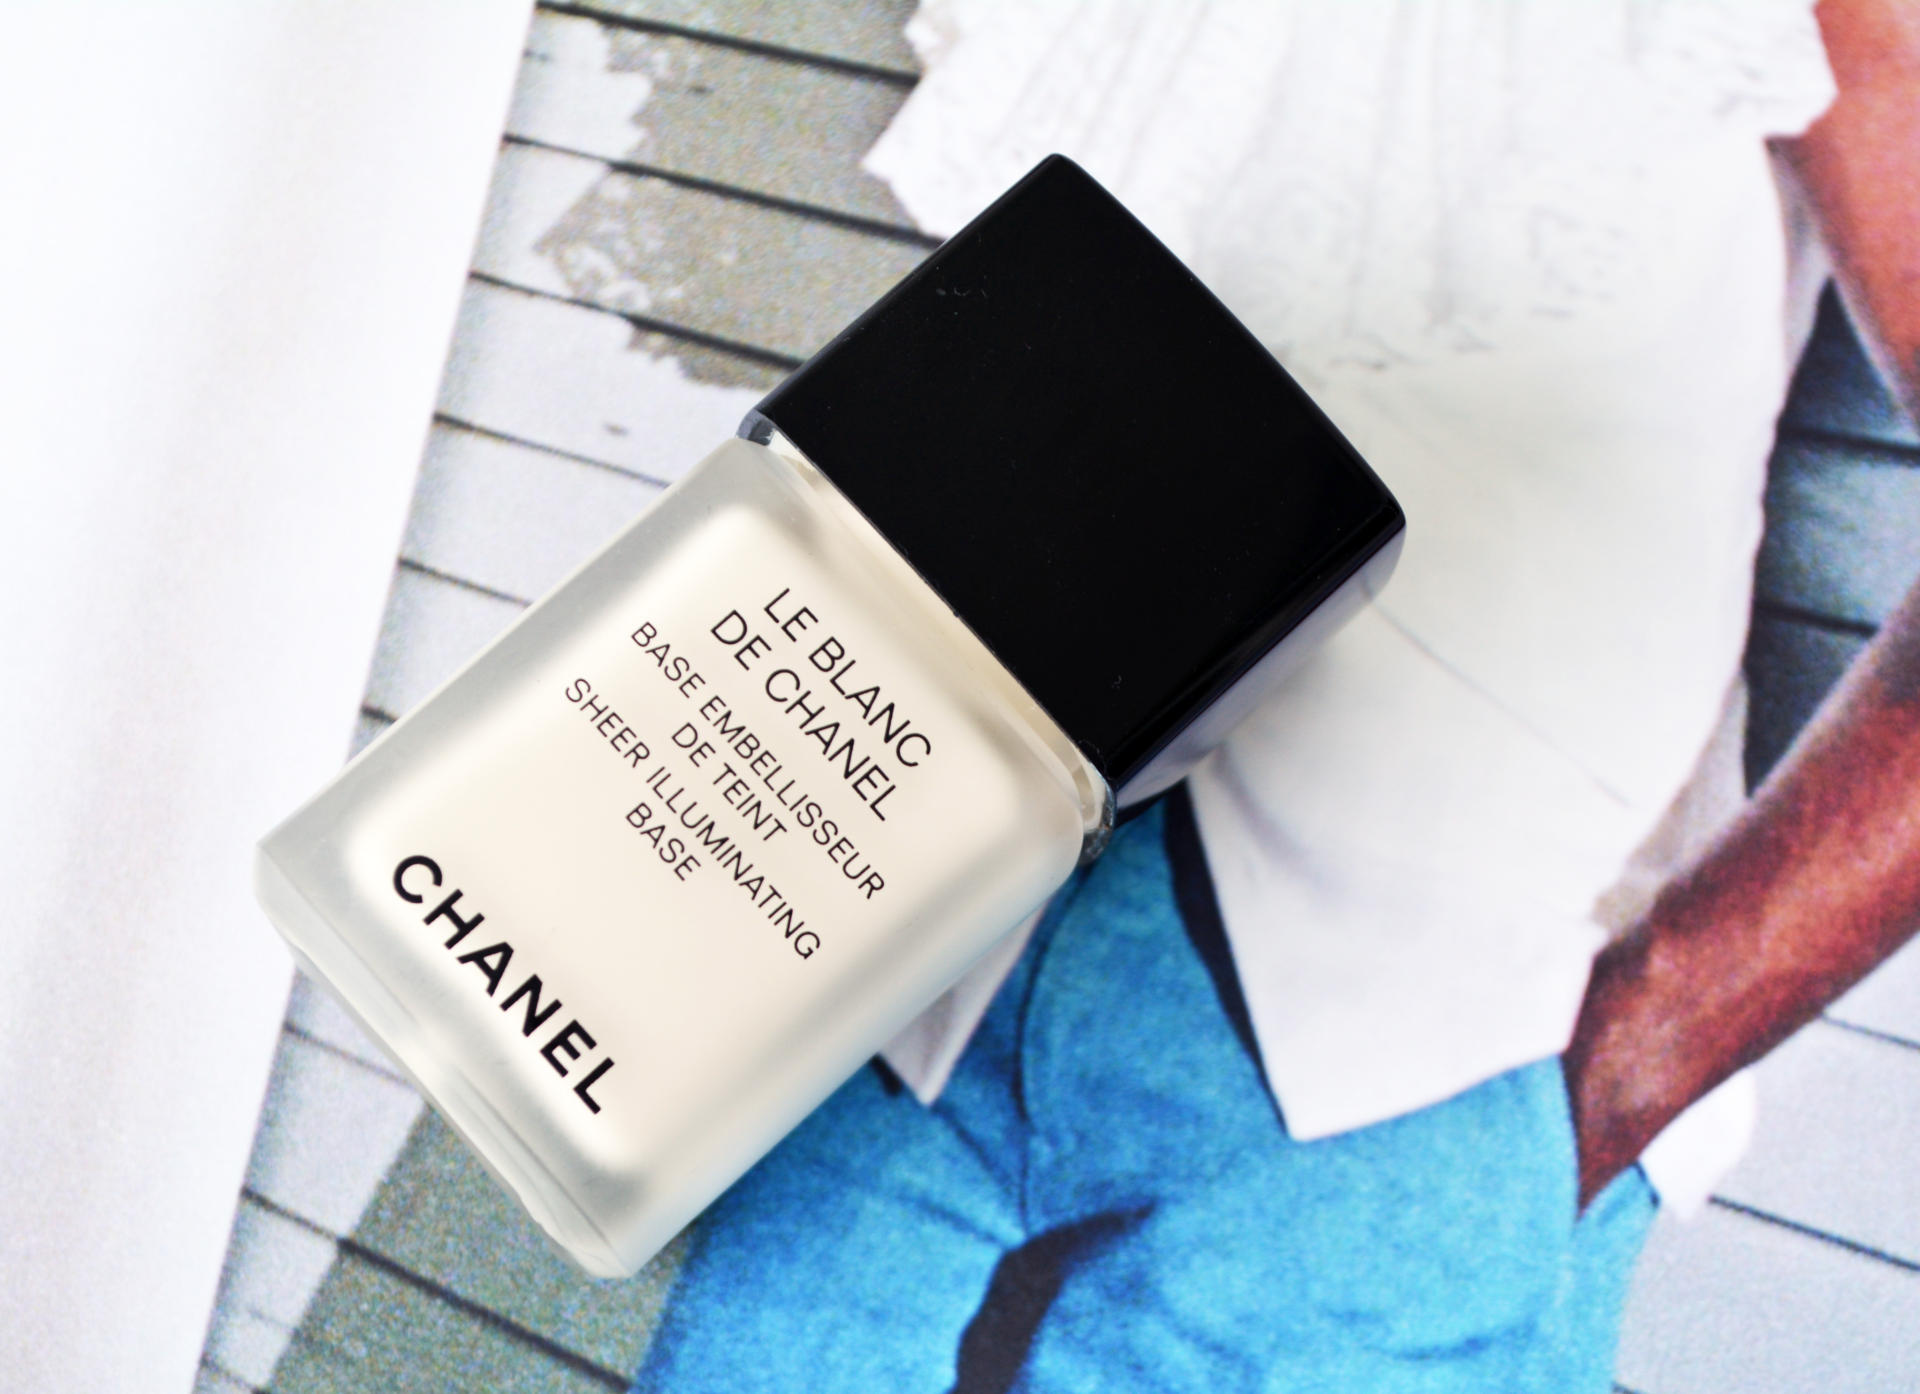 CHANEL Le Blanc de Chanel Sheer Illuminating Base - Reviews